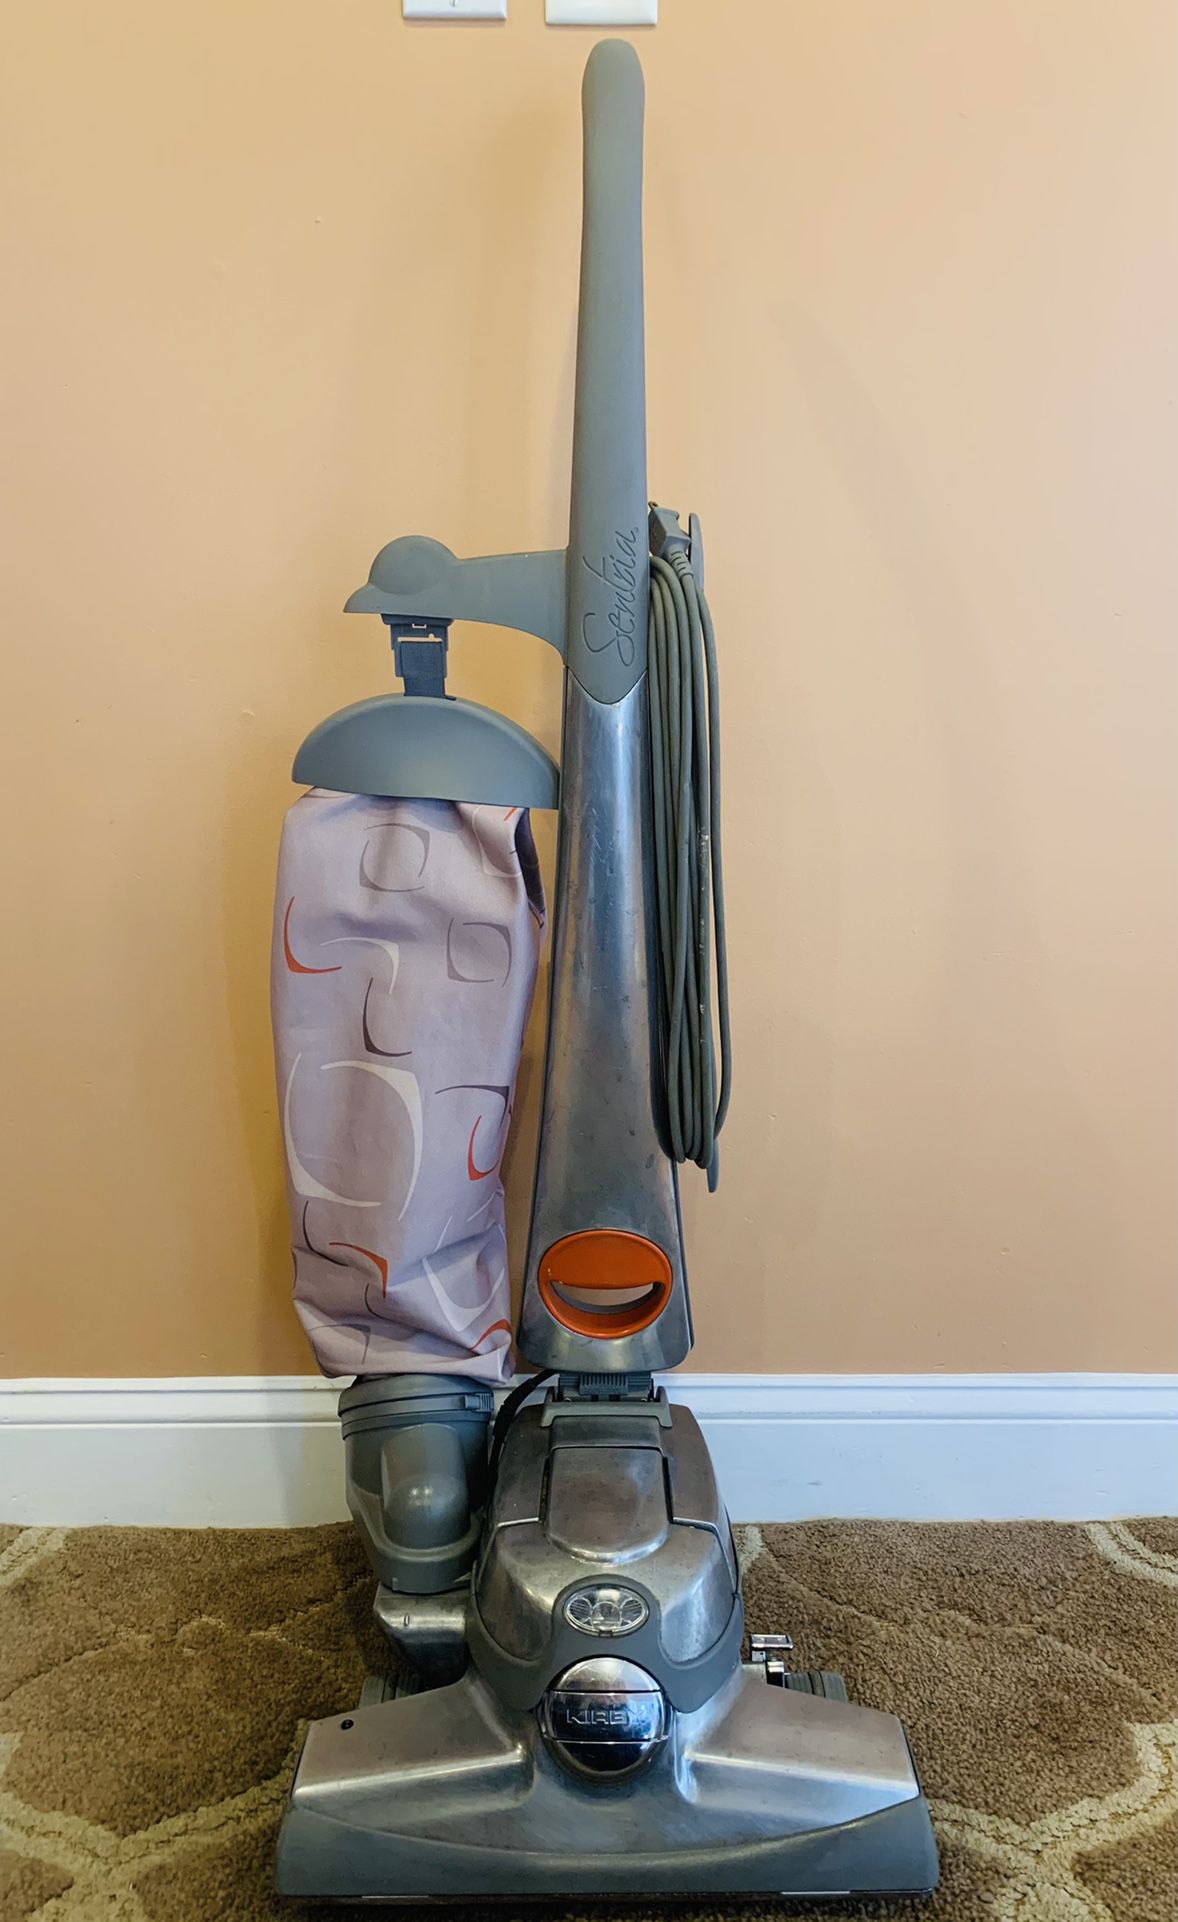 Kirbys Sentria vacuum cleaner